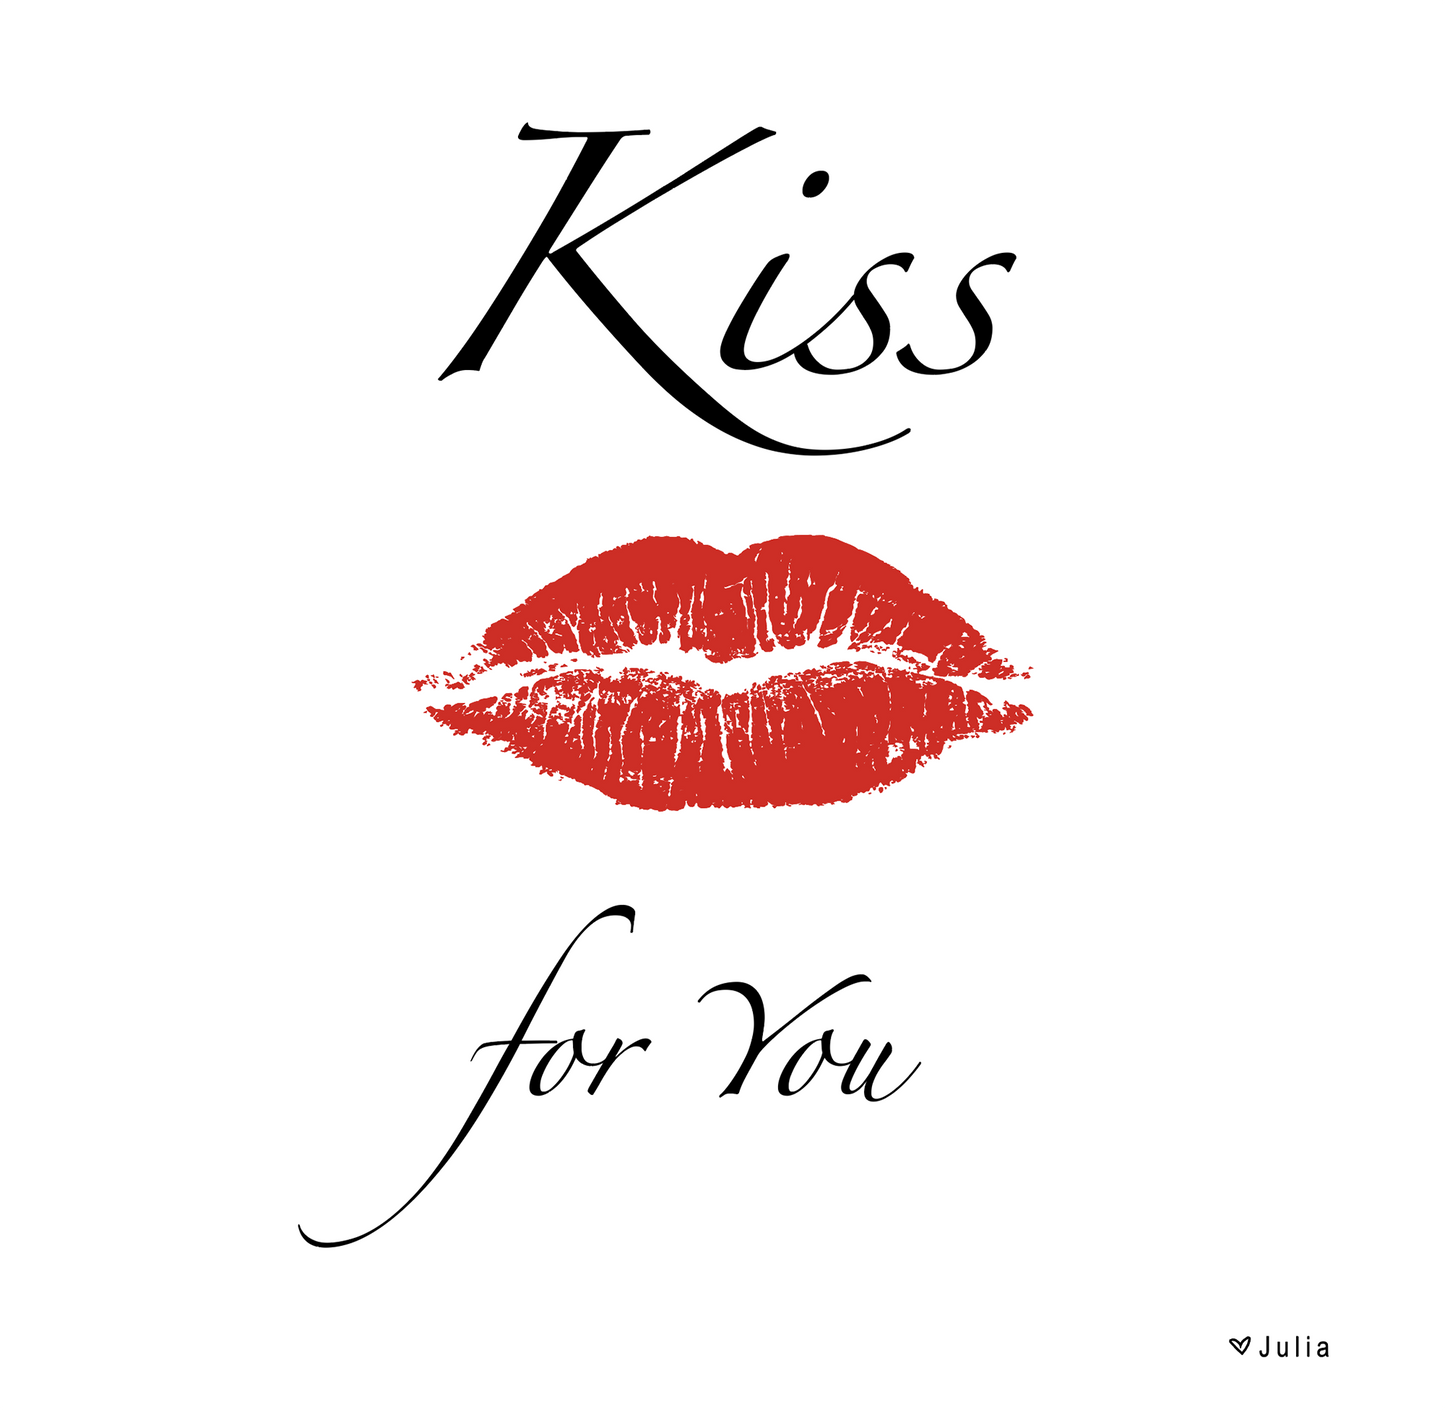 Wandbild auf Leinwand "Kiss for you" personalisiert